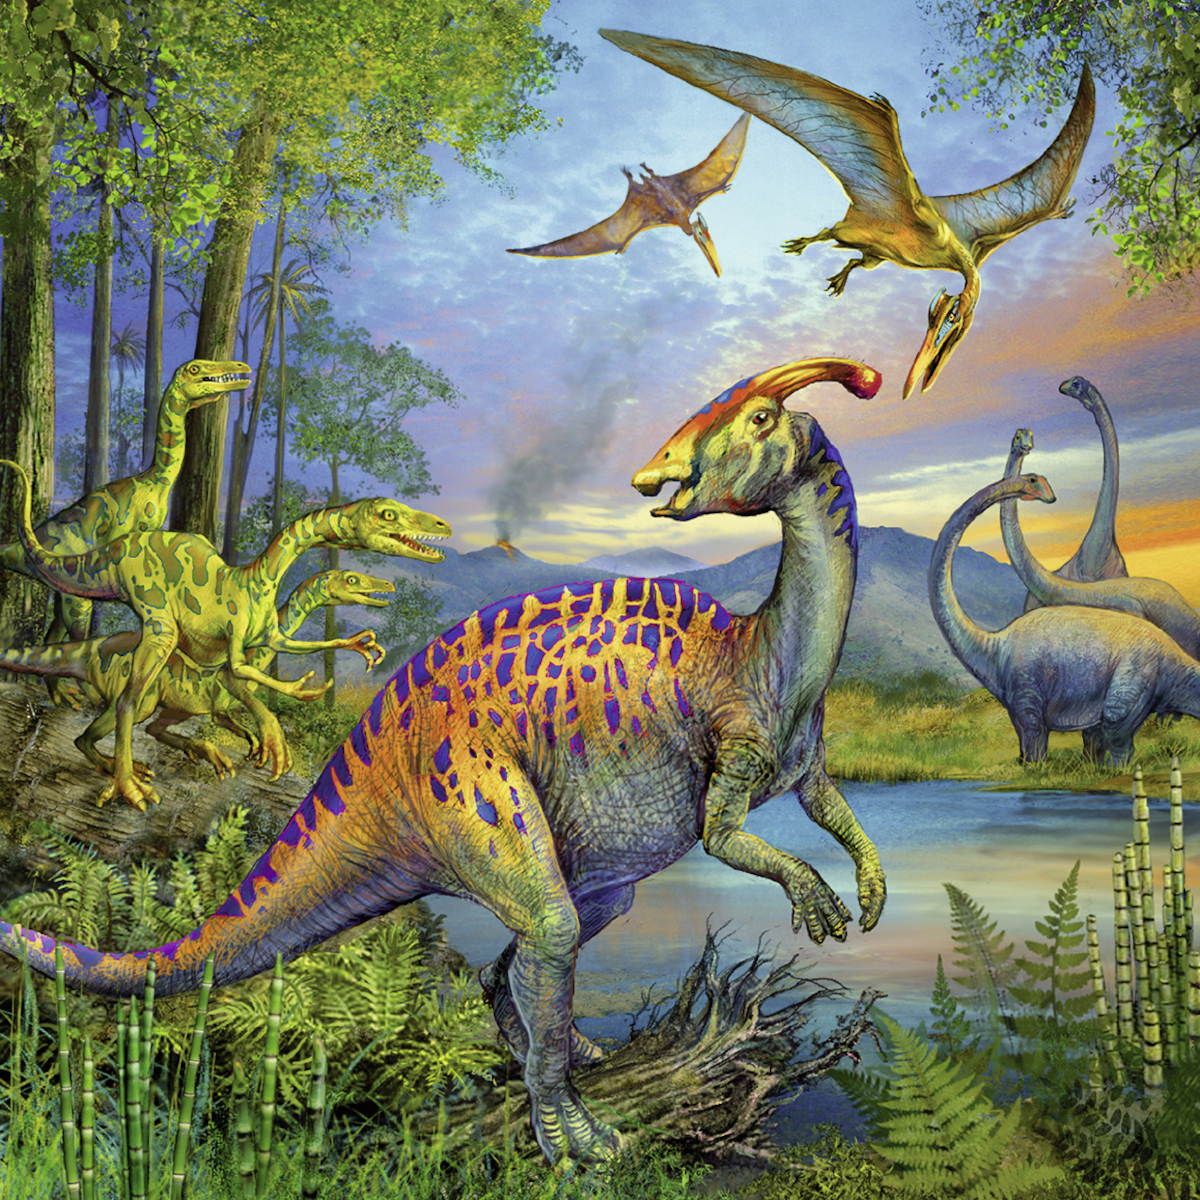 RAVENSBURGER Faszination Dinosaurier Mehrfarbig Puzzle